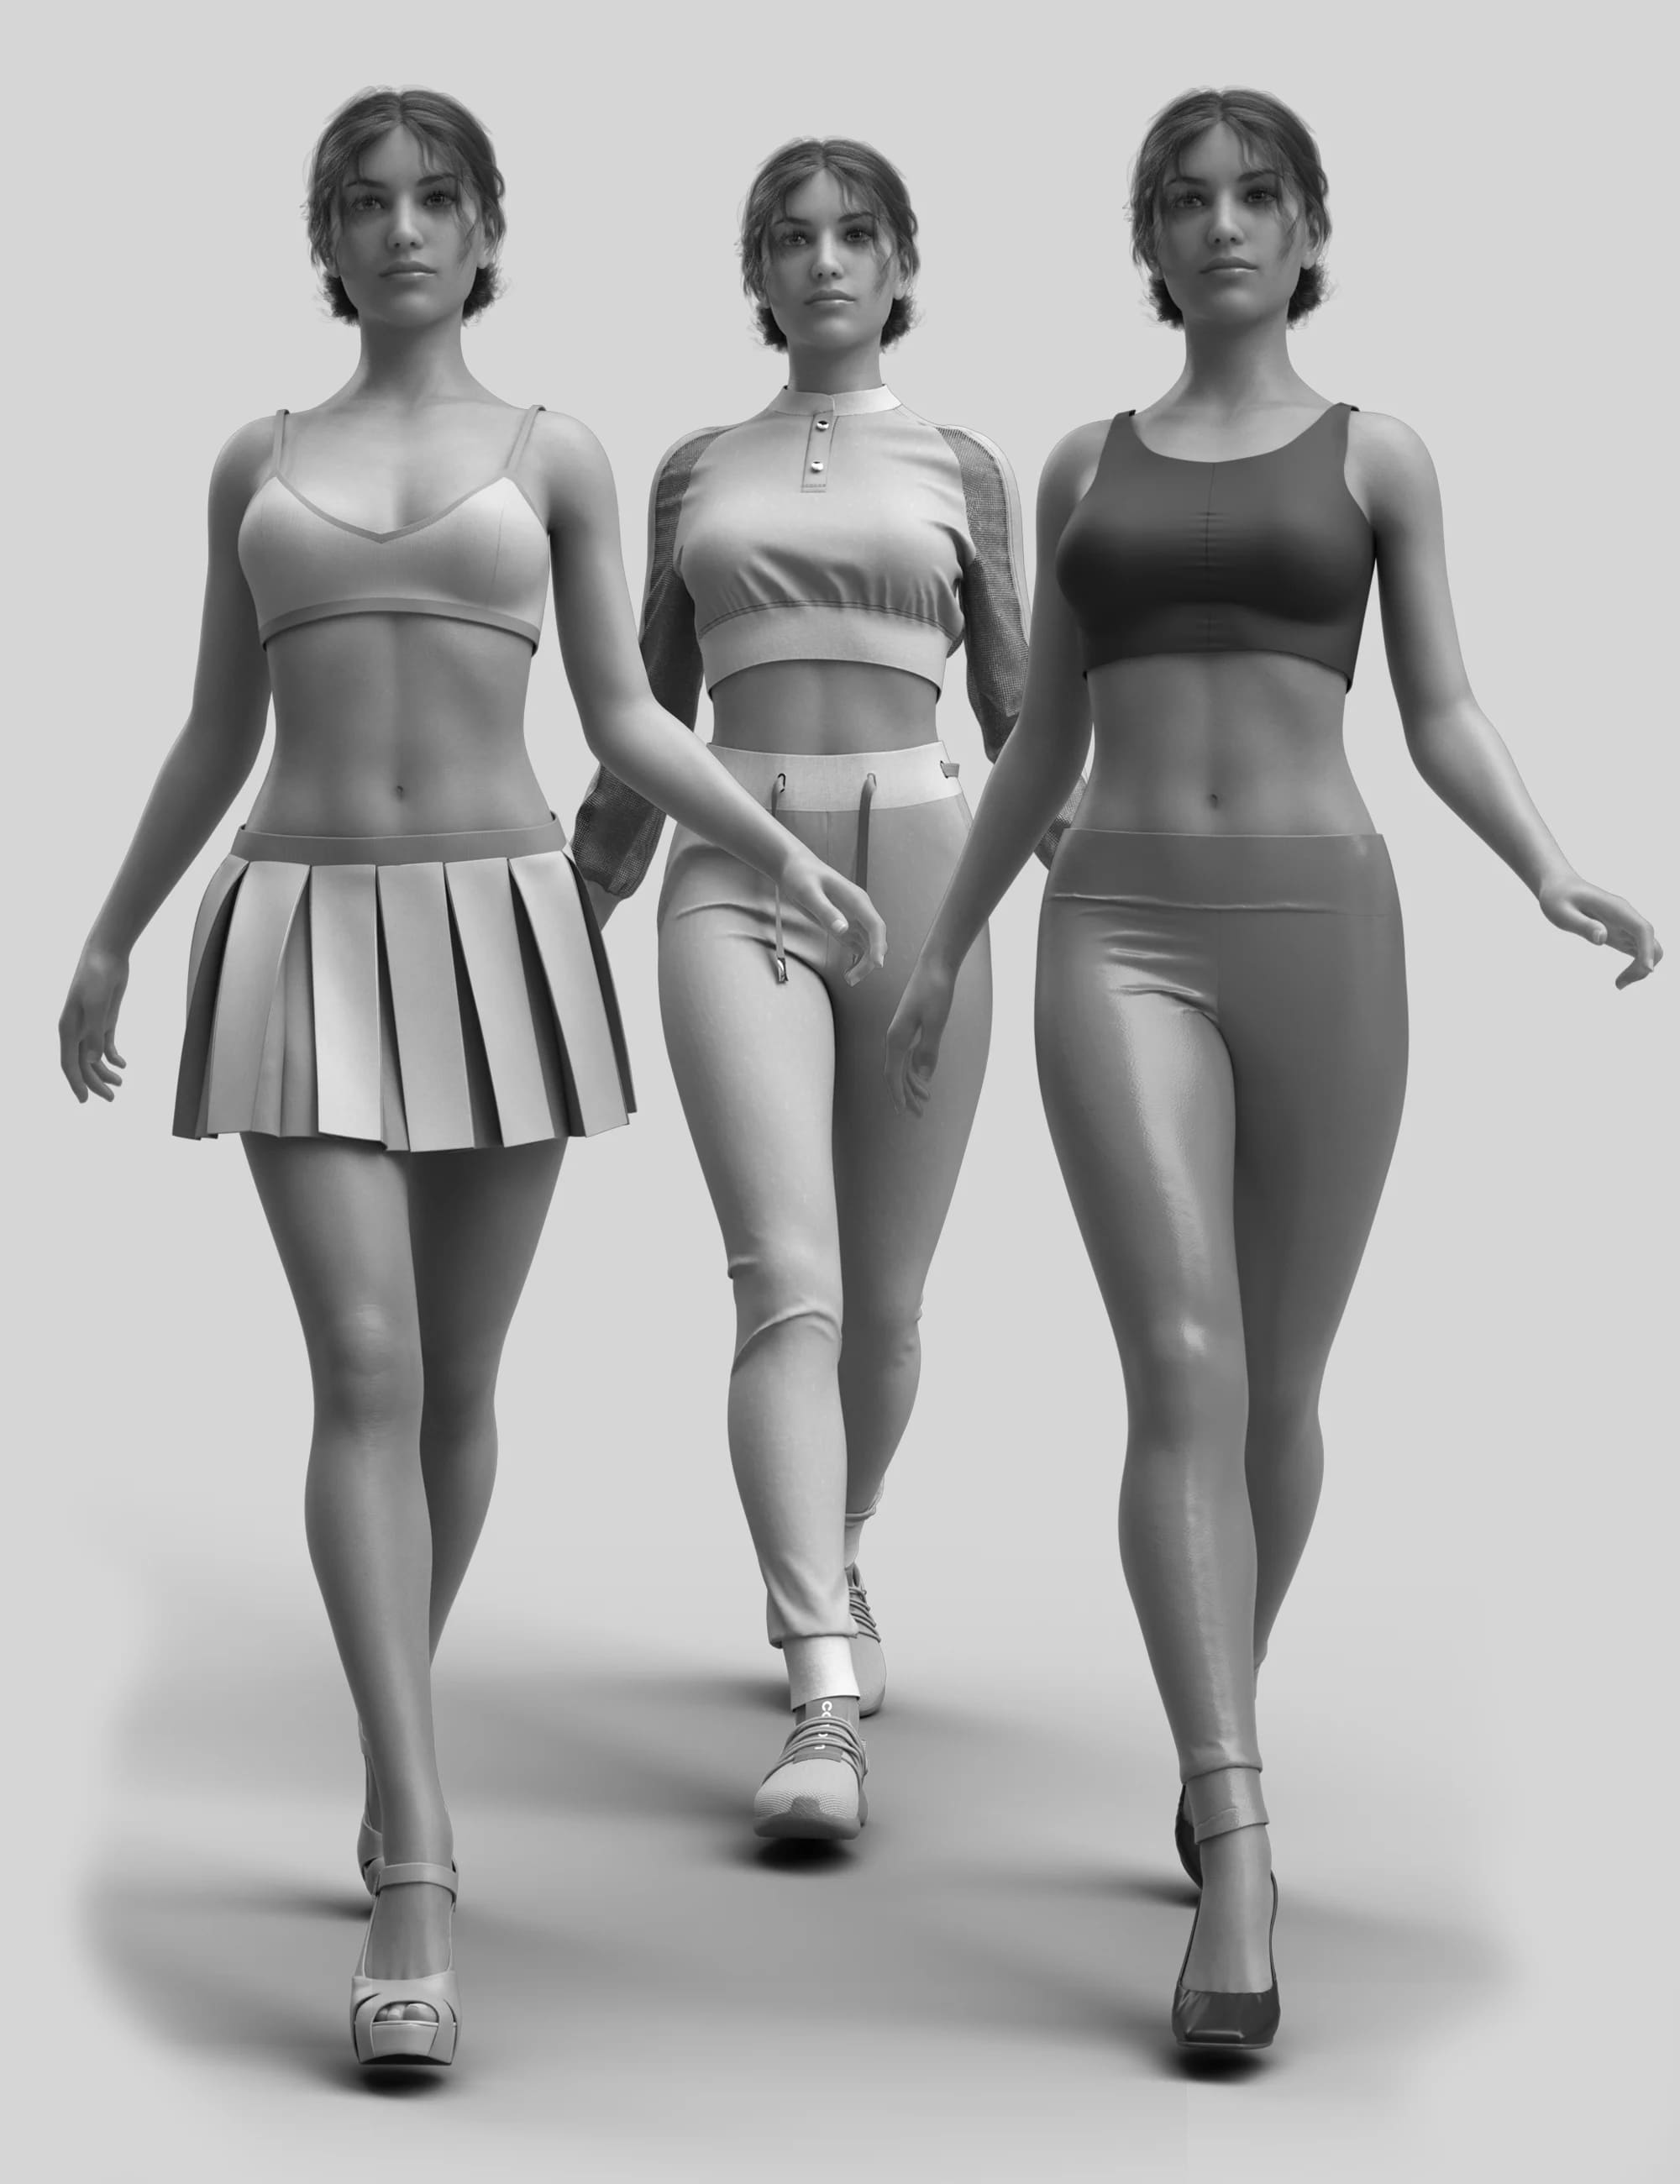 Daz Studio 3D Walk Normal - Animation Kit for Genesis 8 and 8.1 Females Model